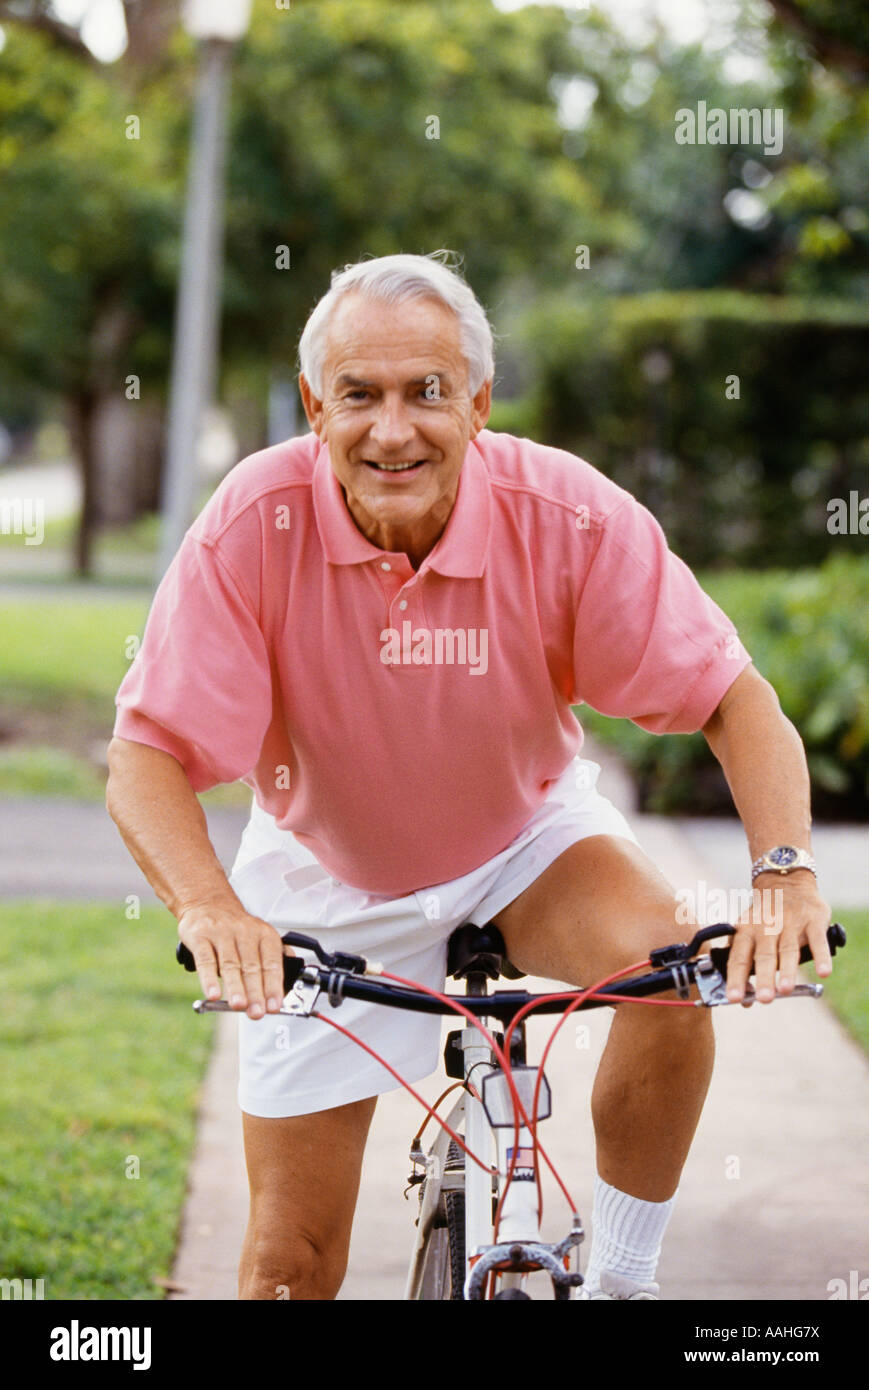 Senior man riding on bicycle smiling portrait Stock Photo